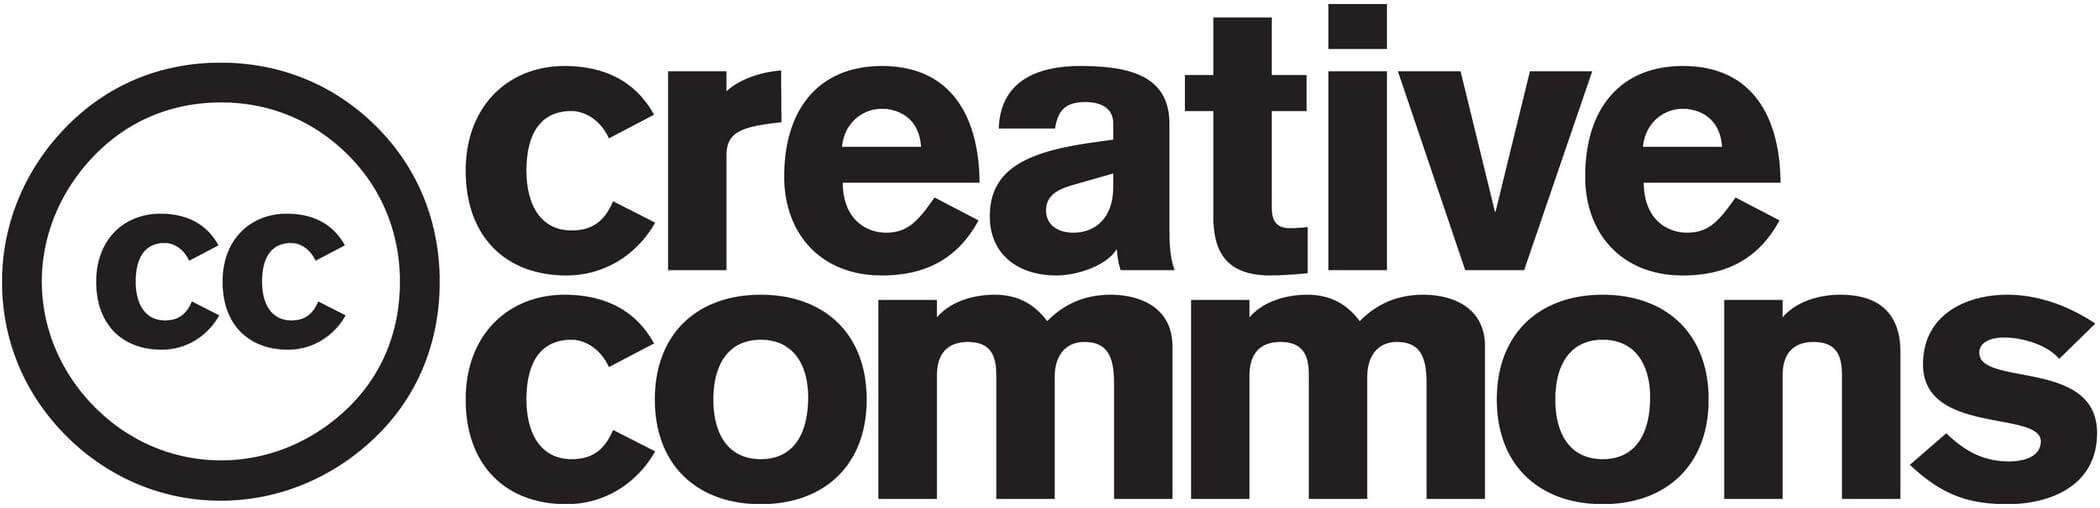 cc logo creative commons